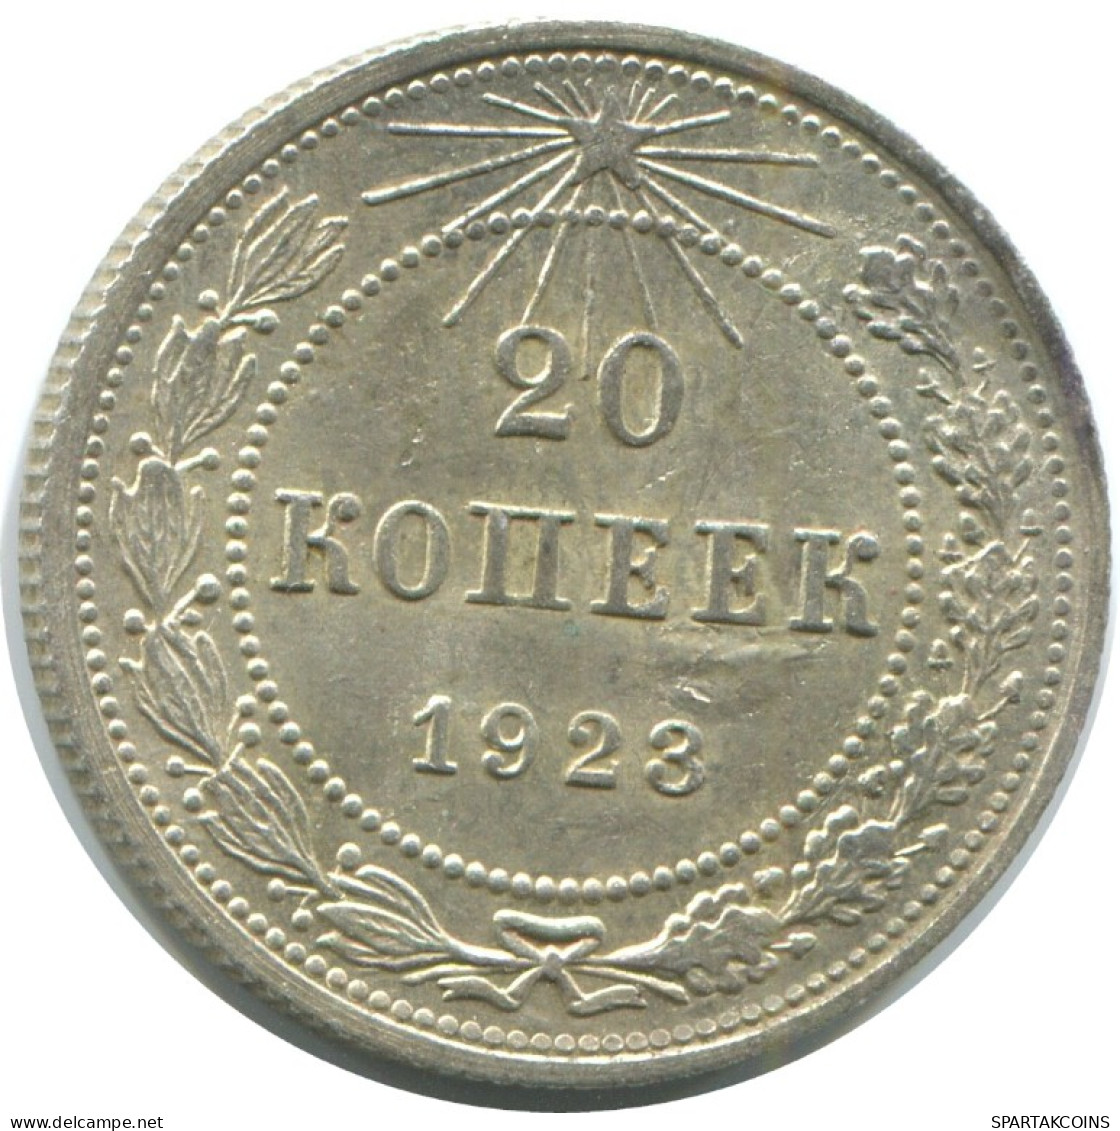 20 KOPEKS 1923 RUSSIA RSFSR SILVER Coin HIGH GRADE #AF586.4.U.A - Rusia